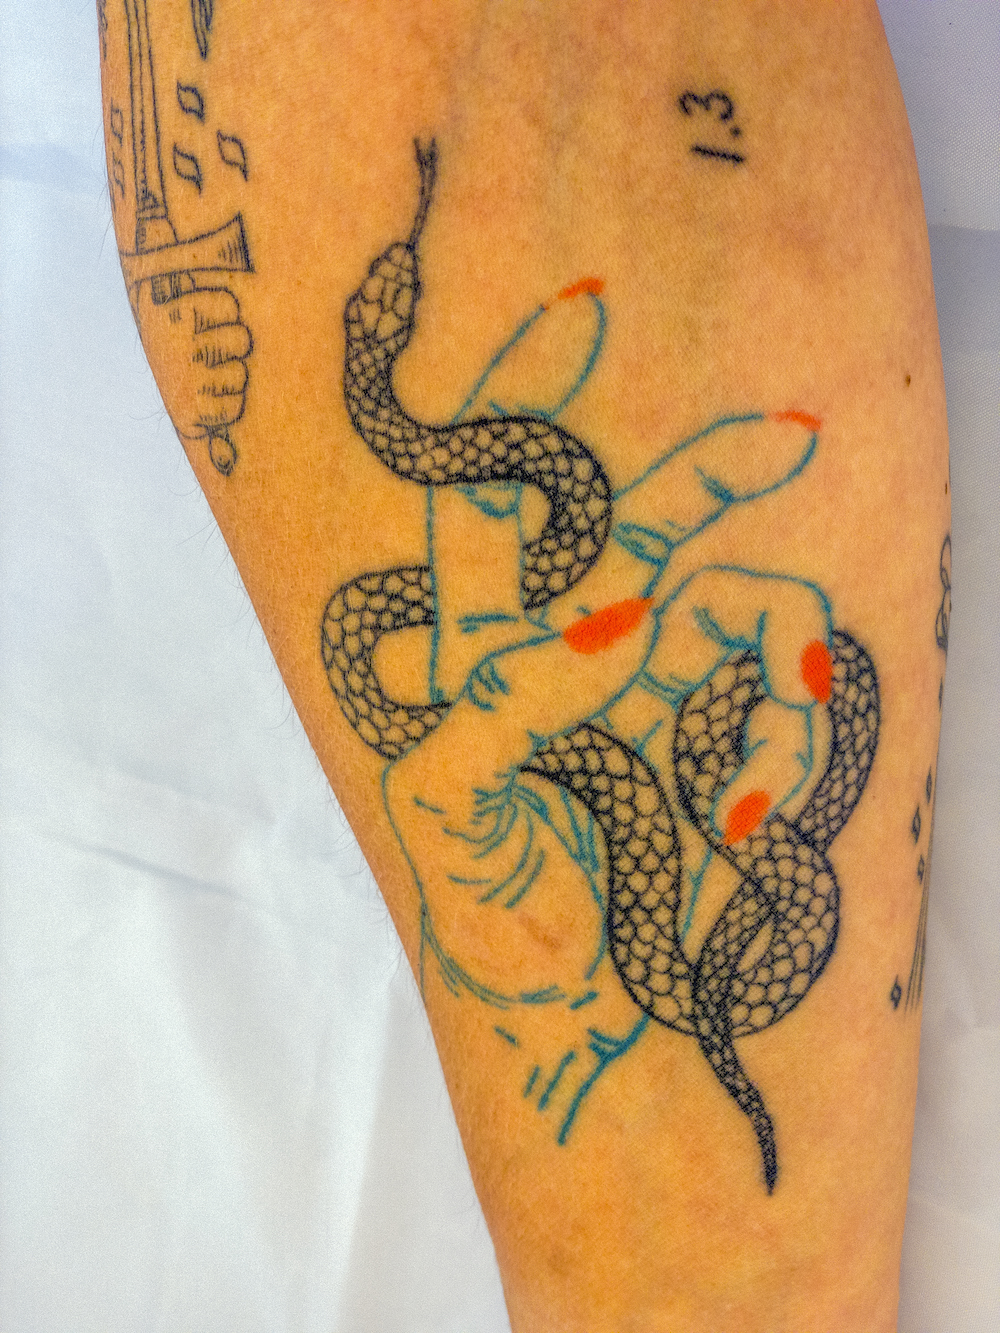 Snake Tattoo | Tattoos for guys, Tattoos, Shoulder tattoo